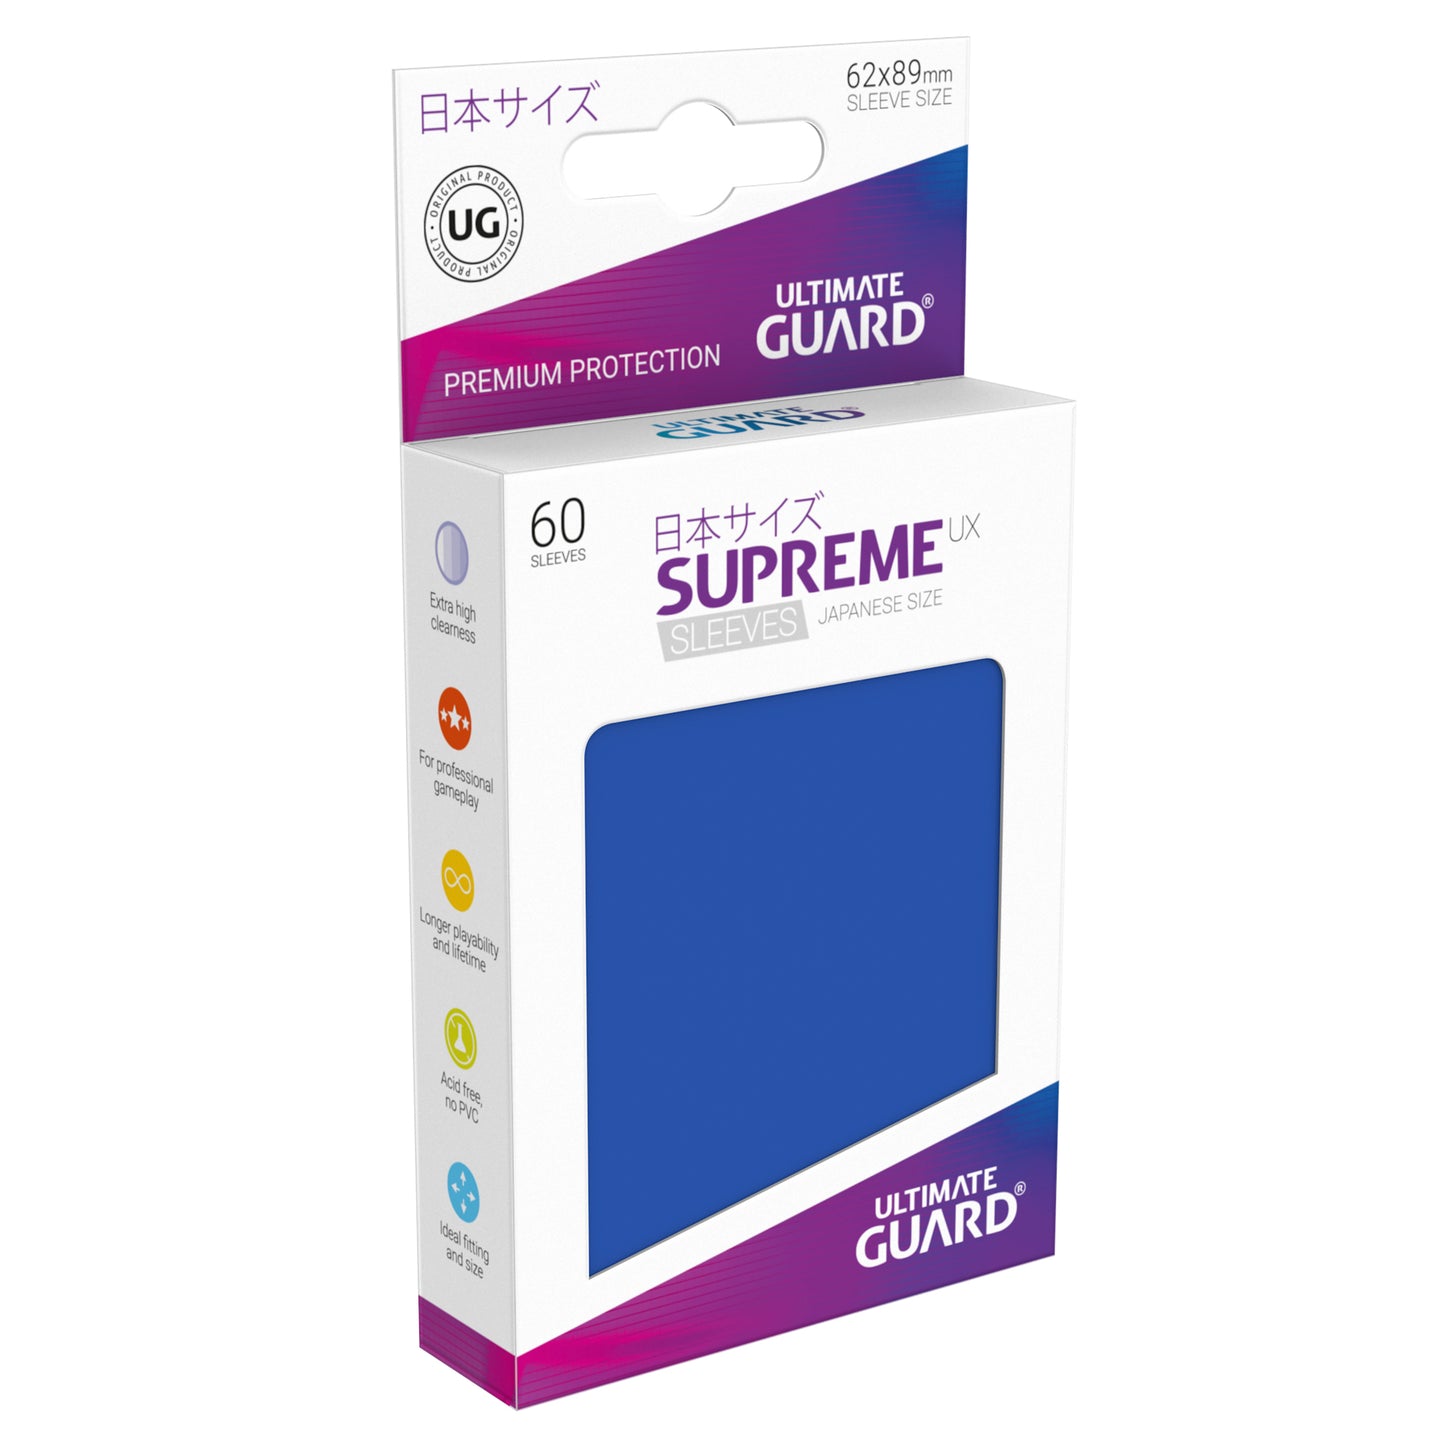 Protège-cartes Ultimate Guard Small x60 Supreme UX Bleu